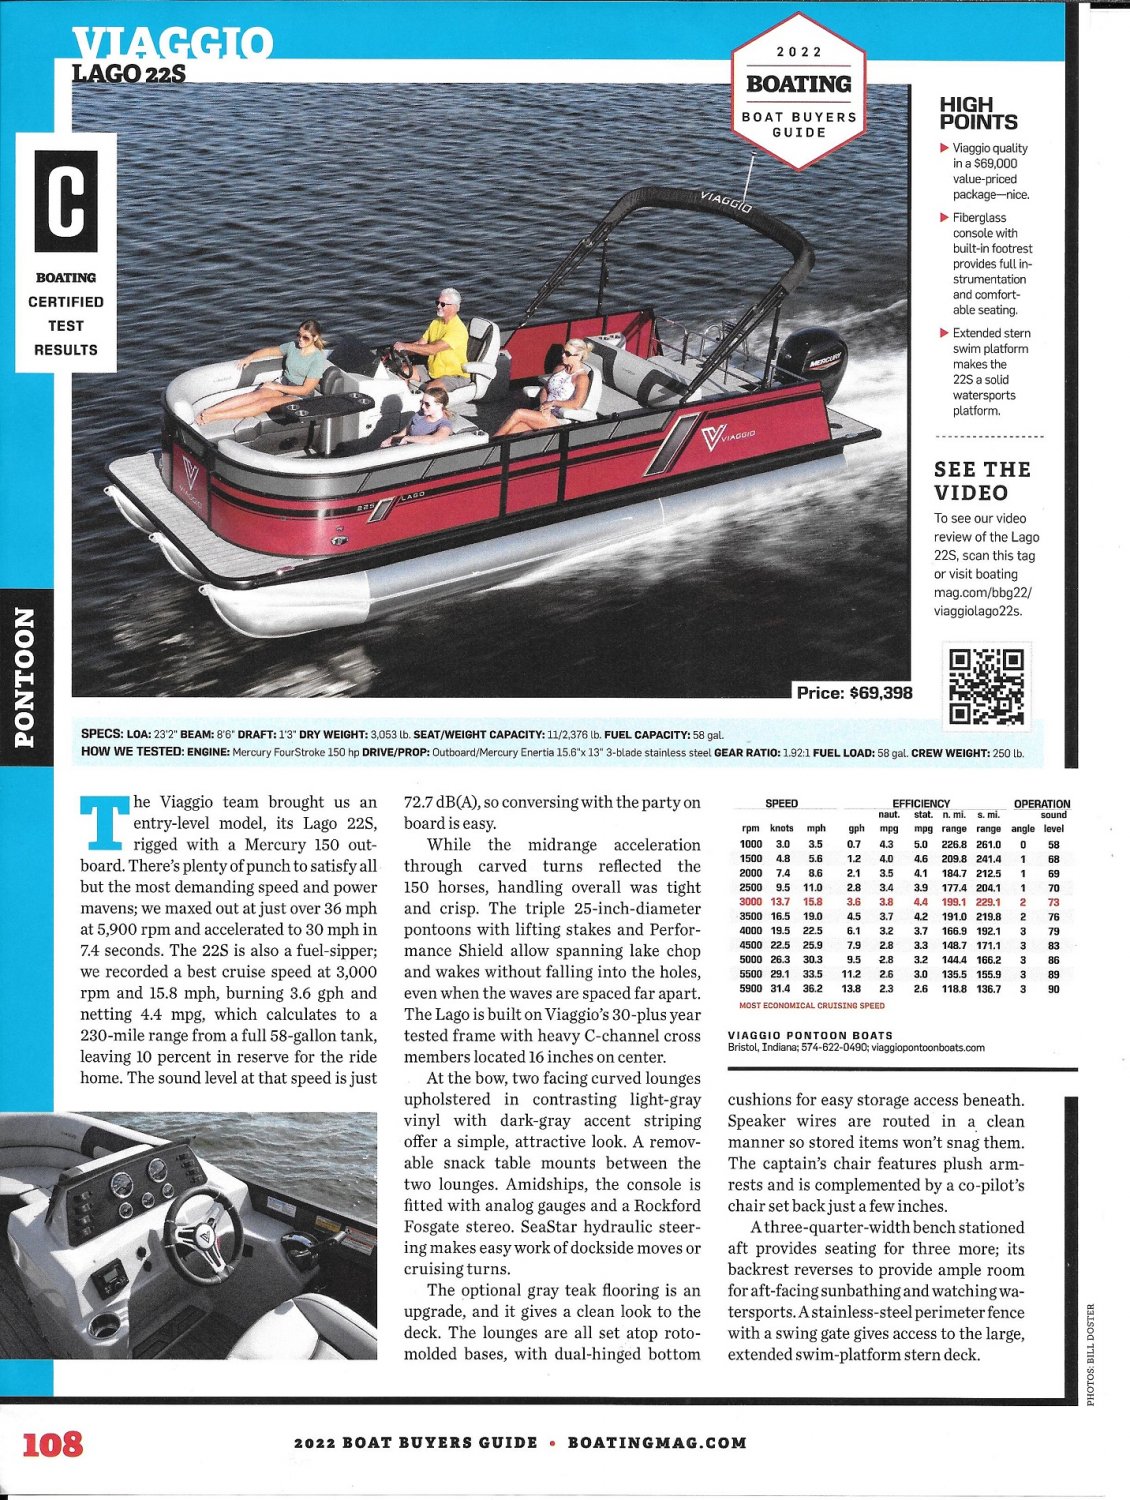 2022 Viaggio Lago 22S Pontoon Boat Review- Photos & Boat Specs